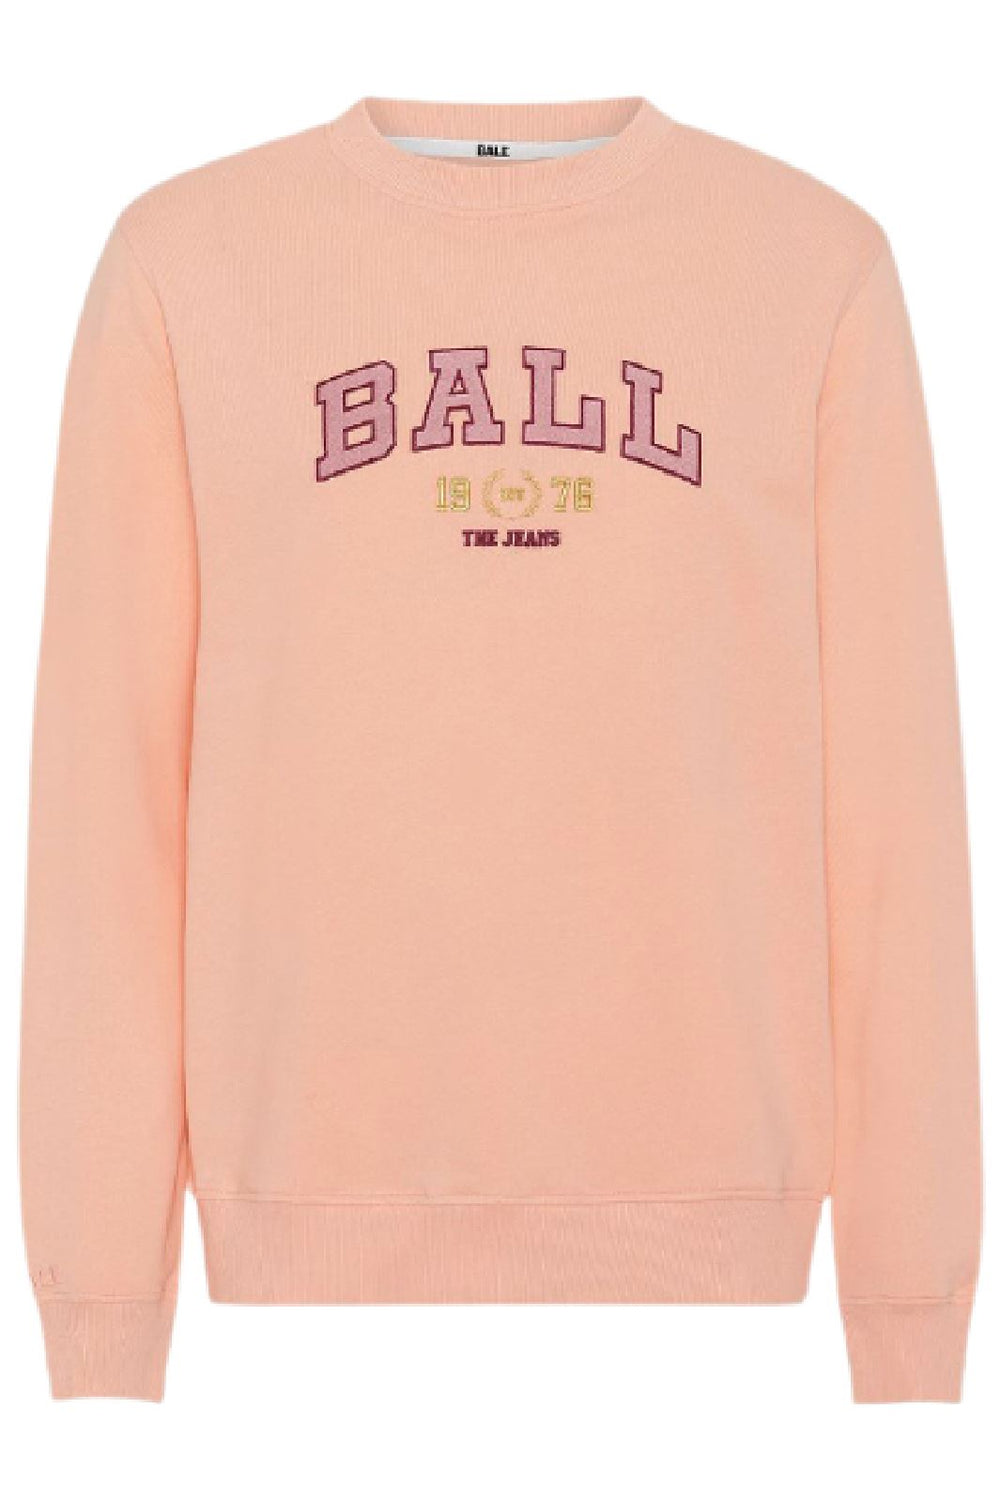 Ball - Sweatshirt L. Taylor - Peach Sweatshirts 